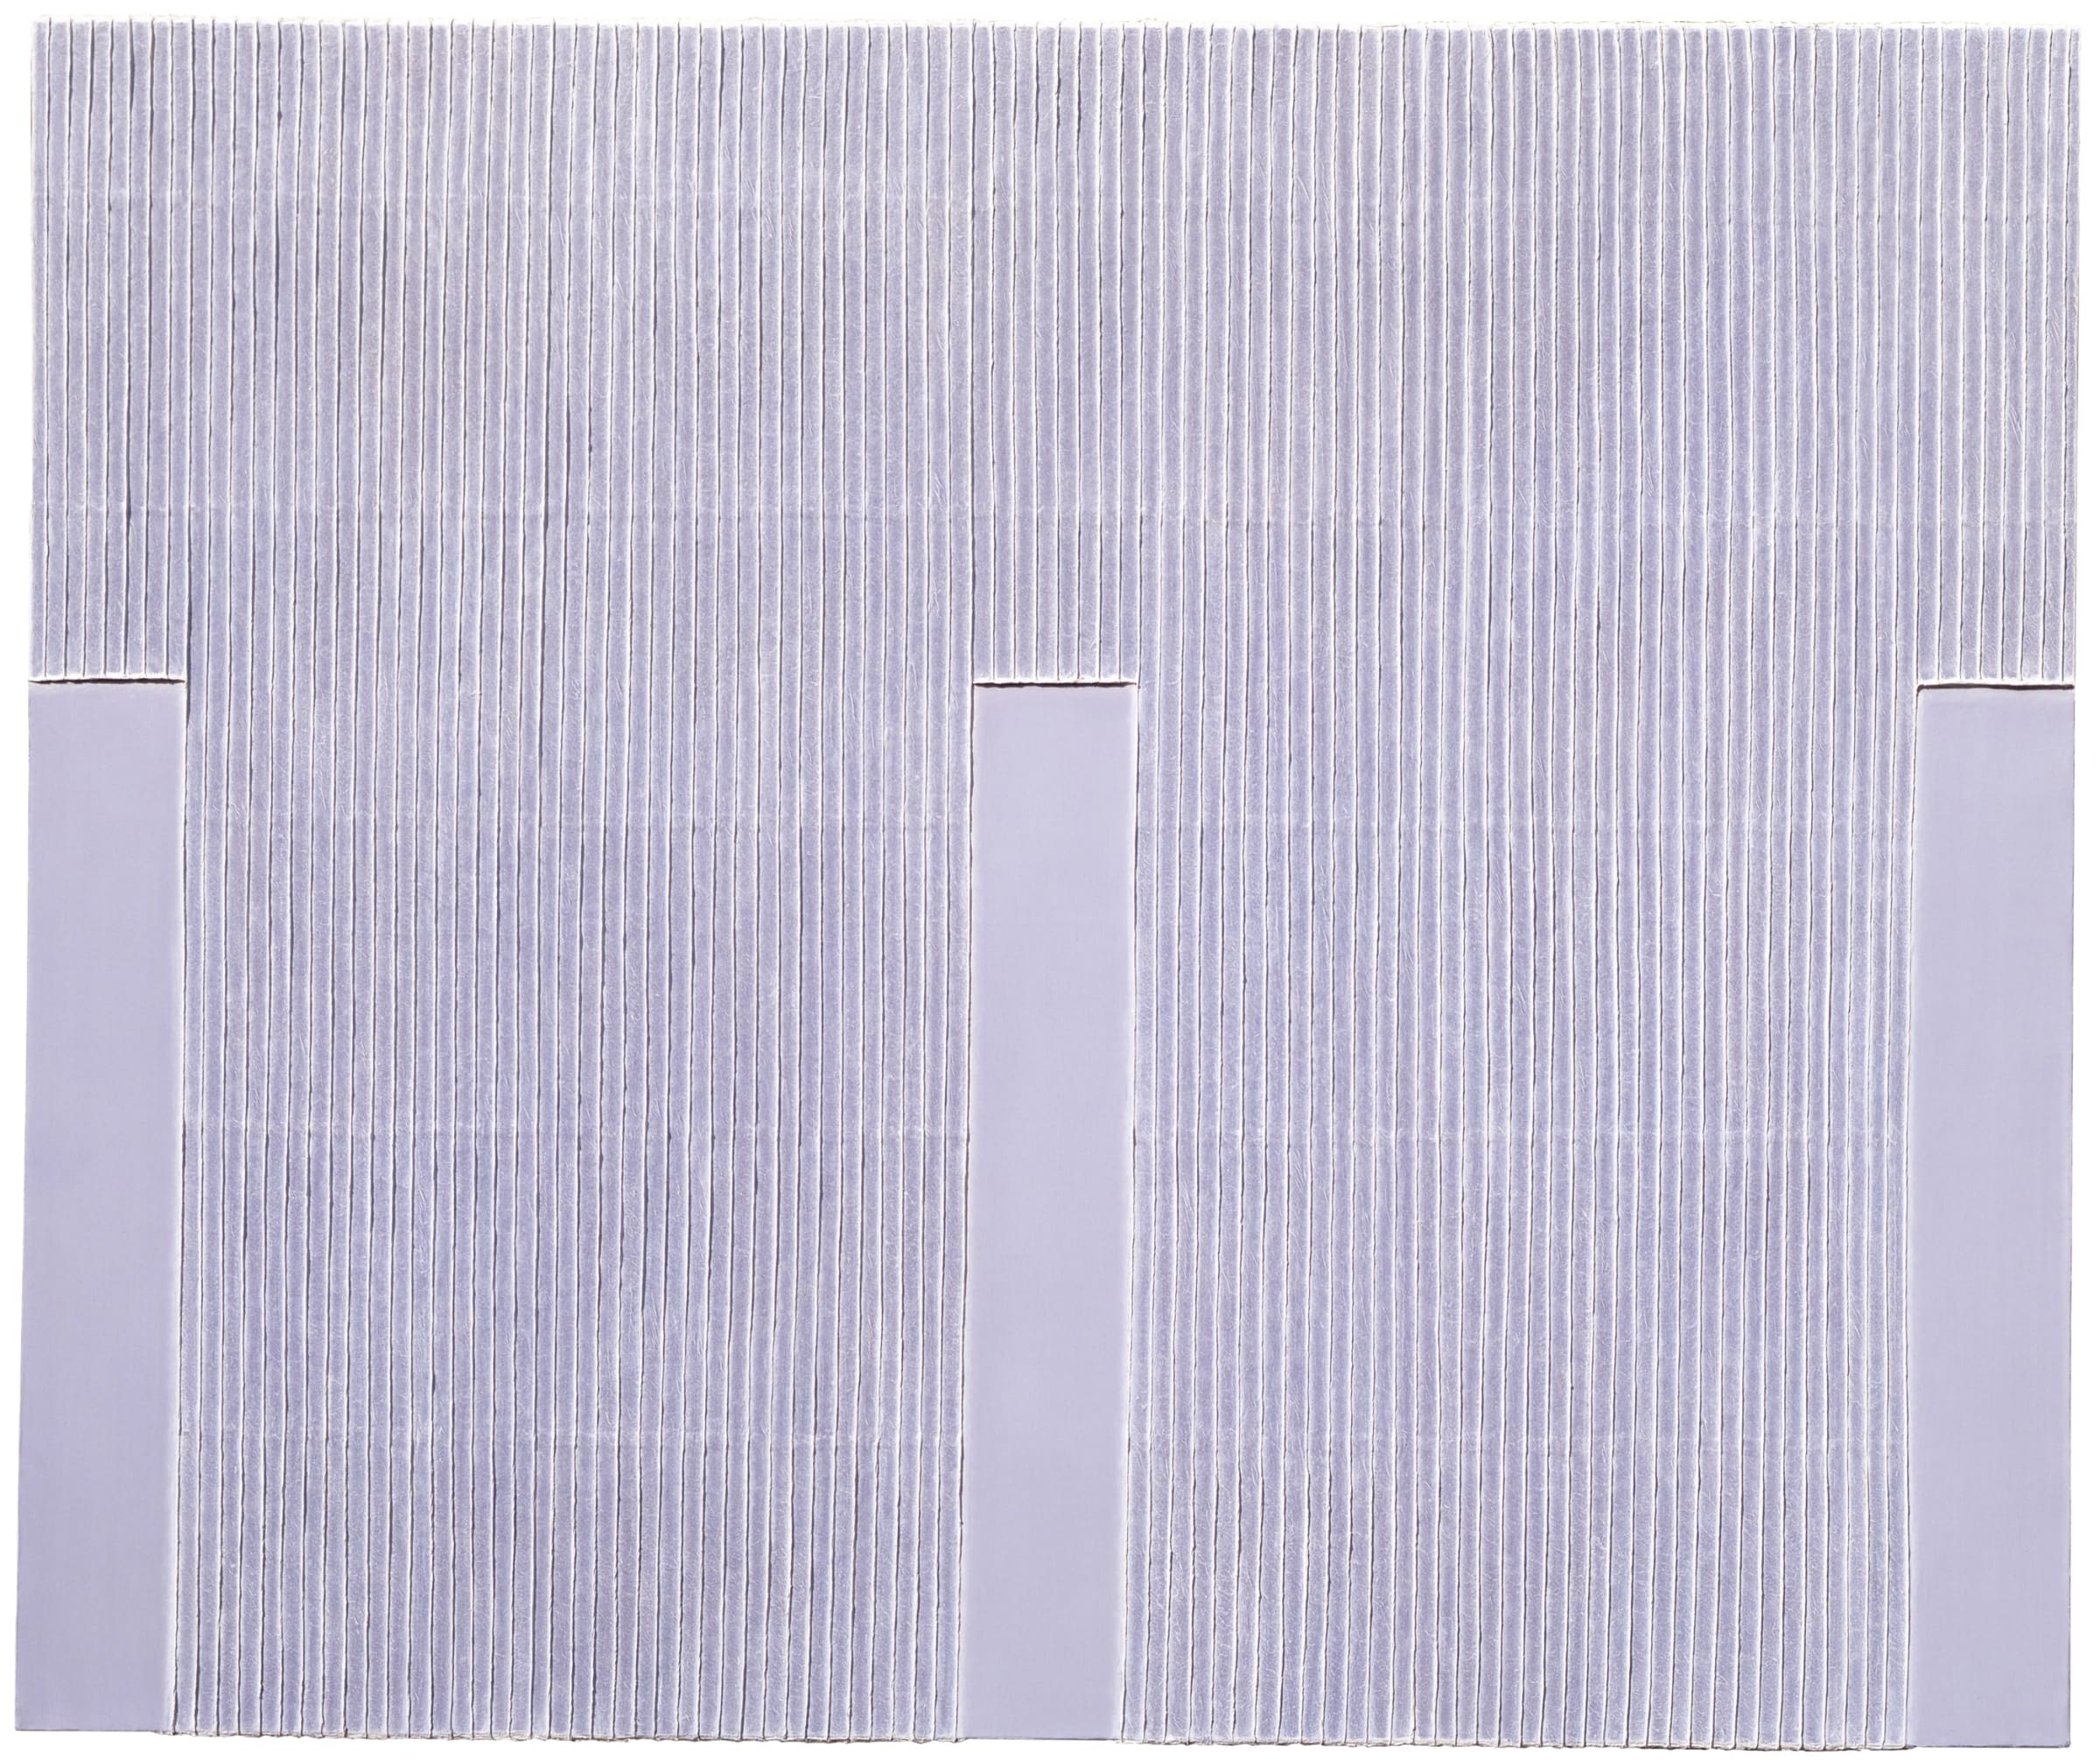 Park Seo-Bo – Ecriture No. 3-78, 1978, pencil, oil on canvas, 130 x 162 cm